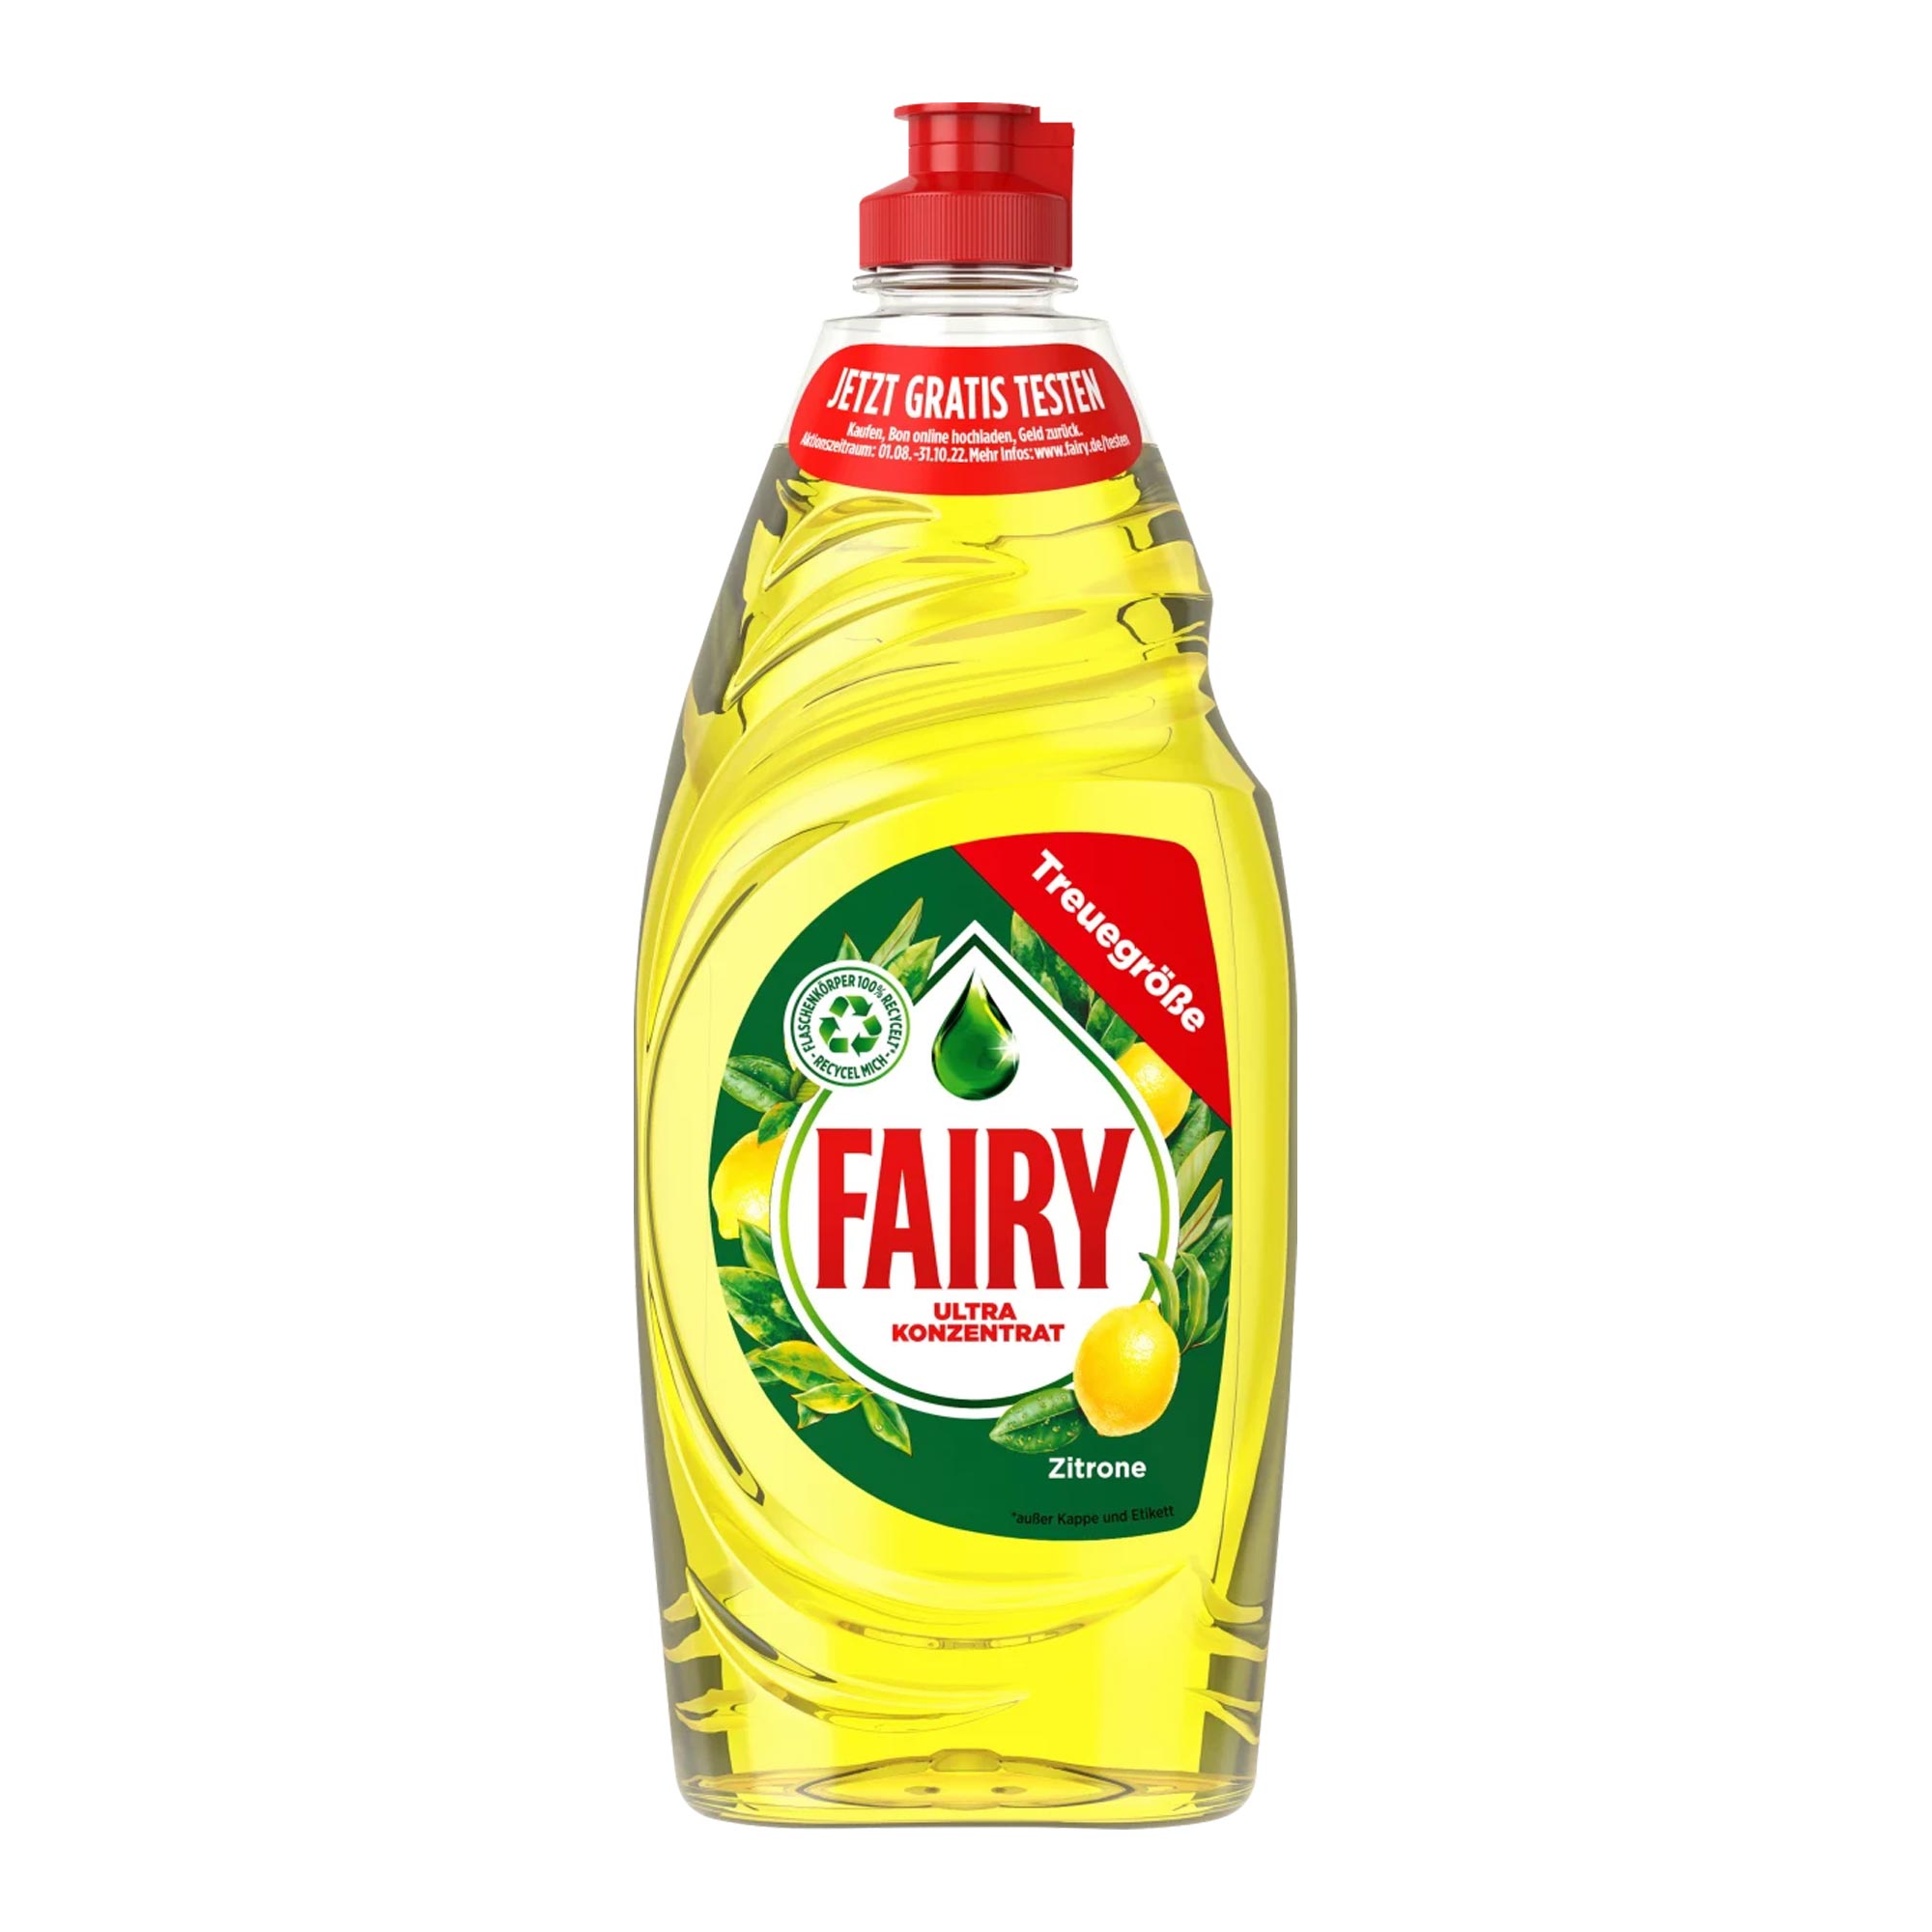 Fairy Ultra Konzentrat Zitrone Handspülmittel